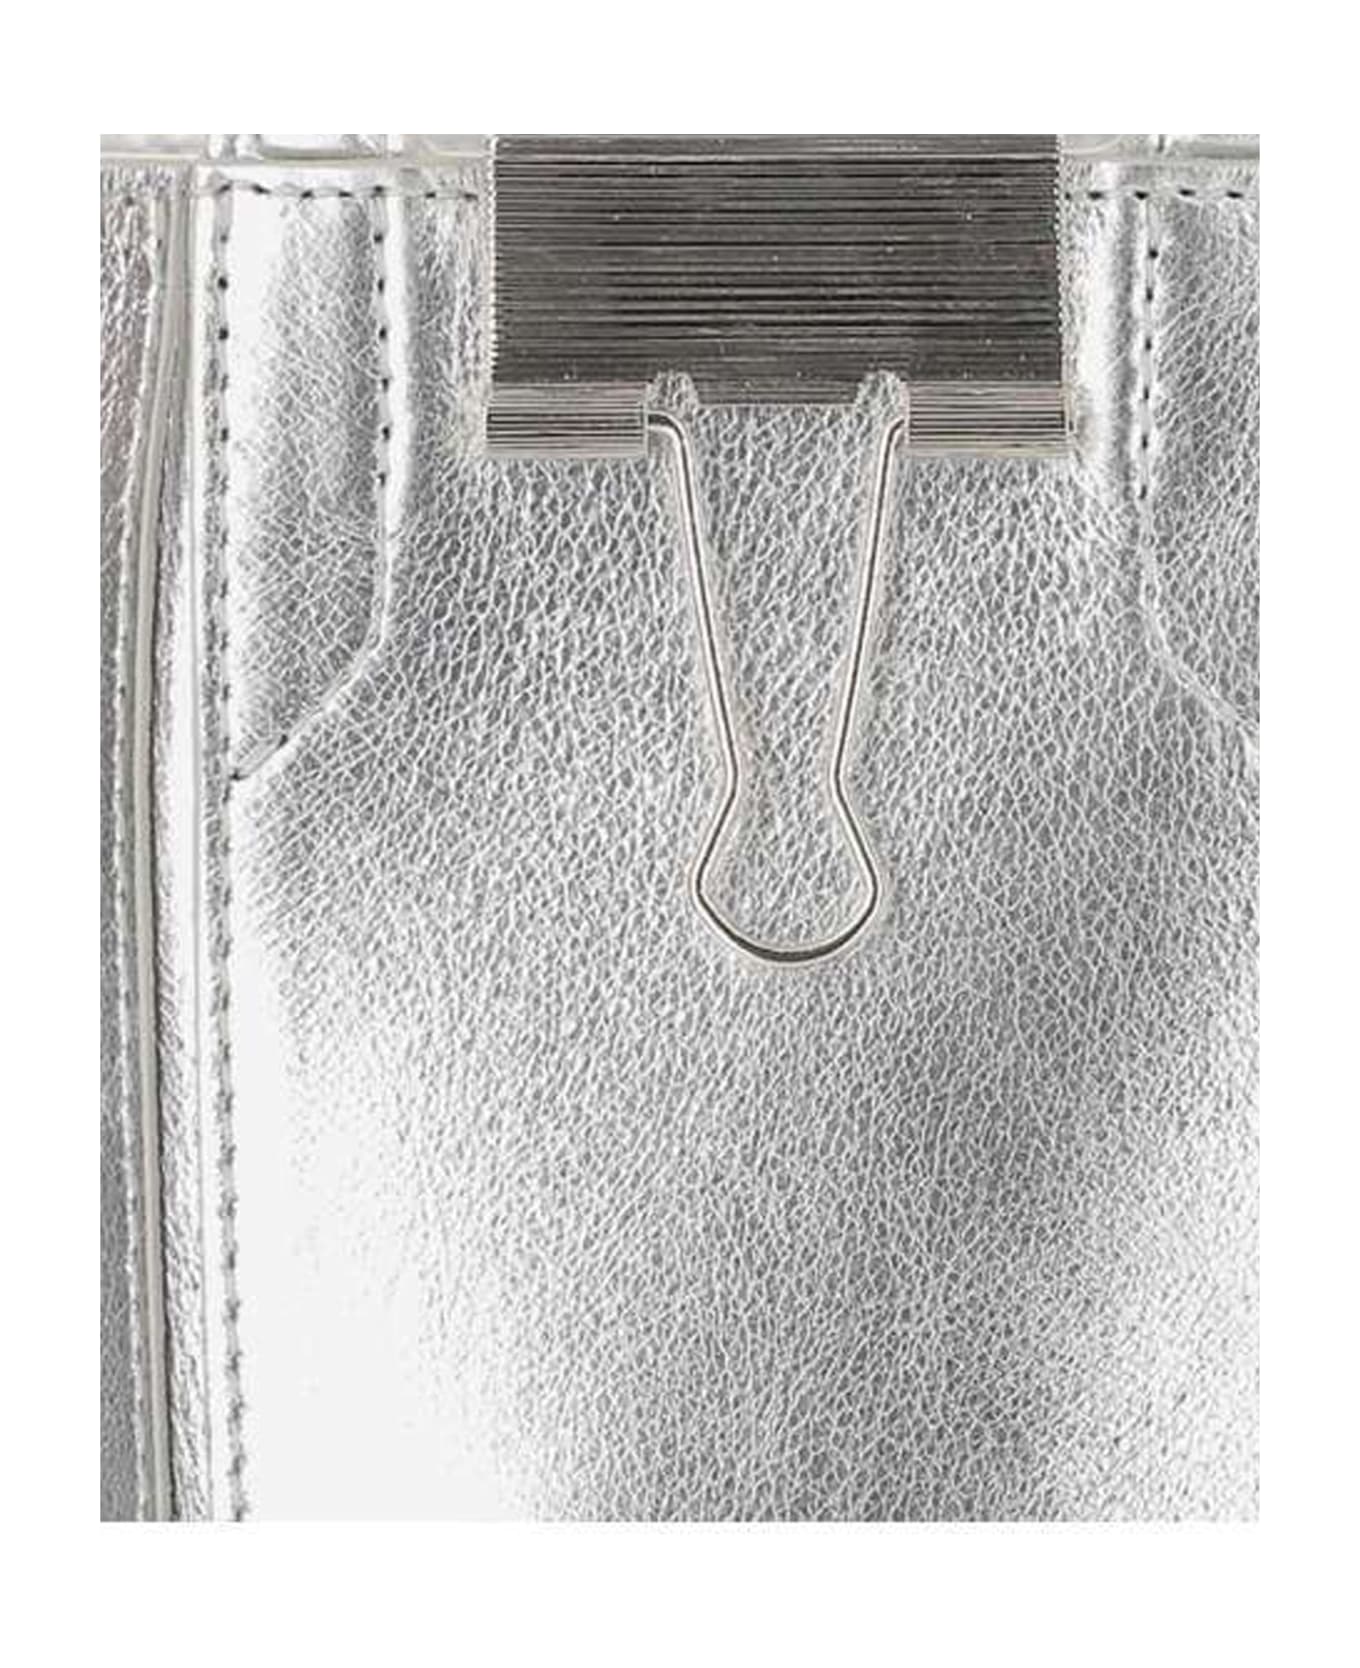 Off-White Leather Handbag - Silver トートバッグ